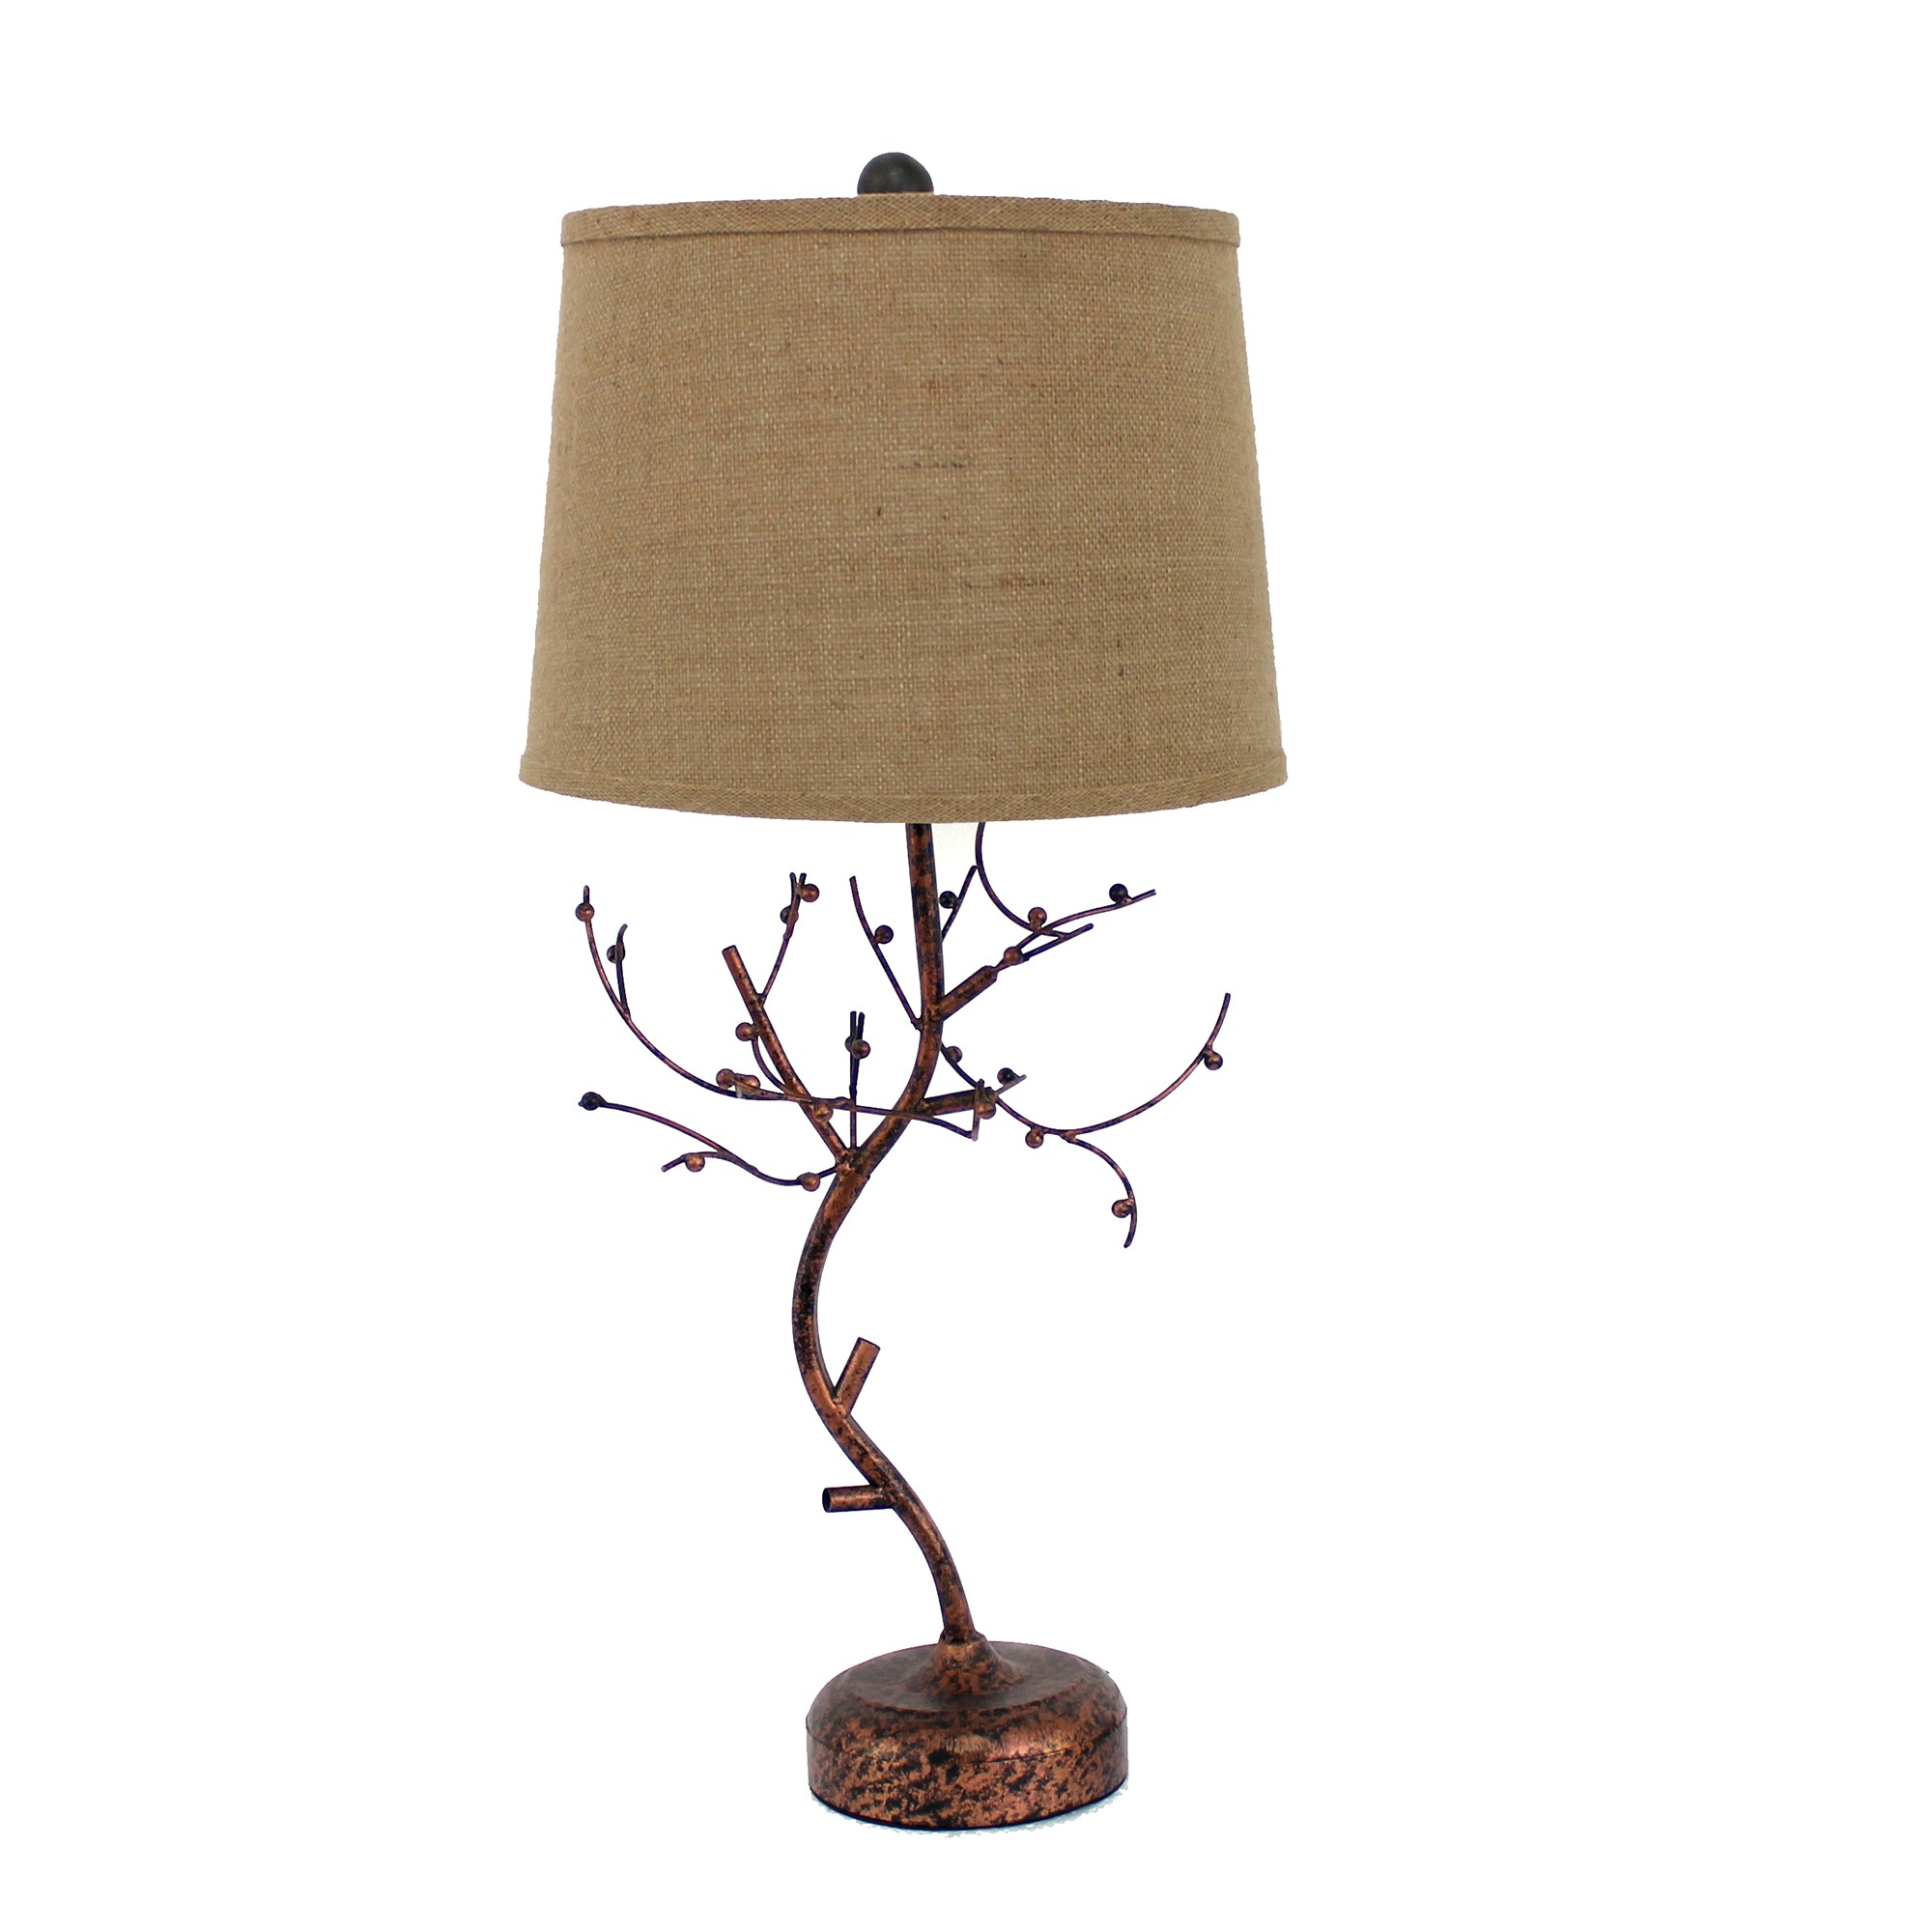 13" x 15" x 31" Bronze, Vintage, Metal With Elegant Tree Base - Table Lamp